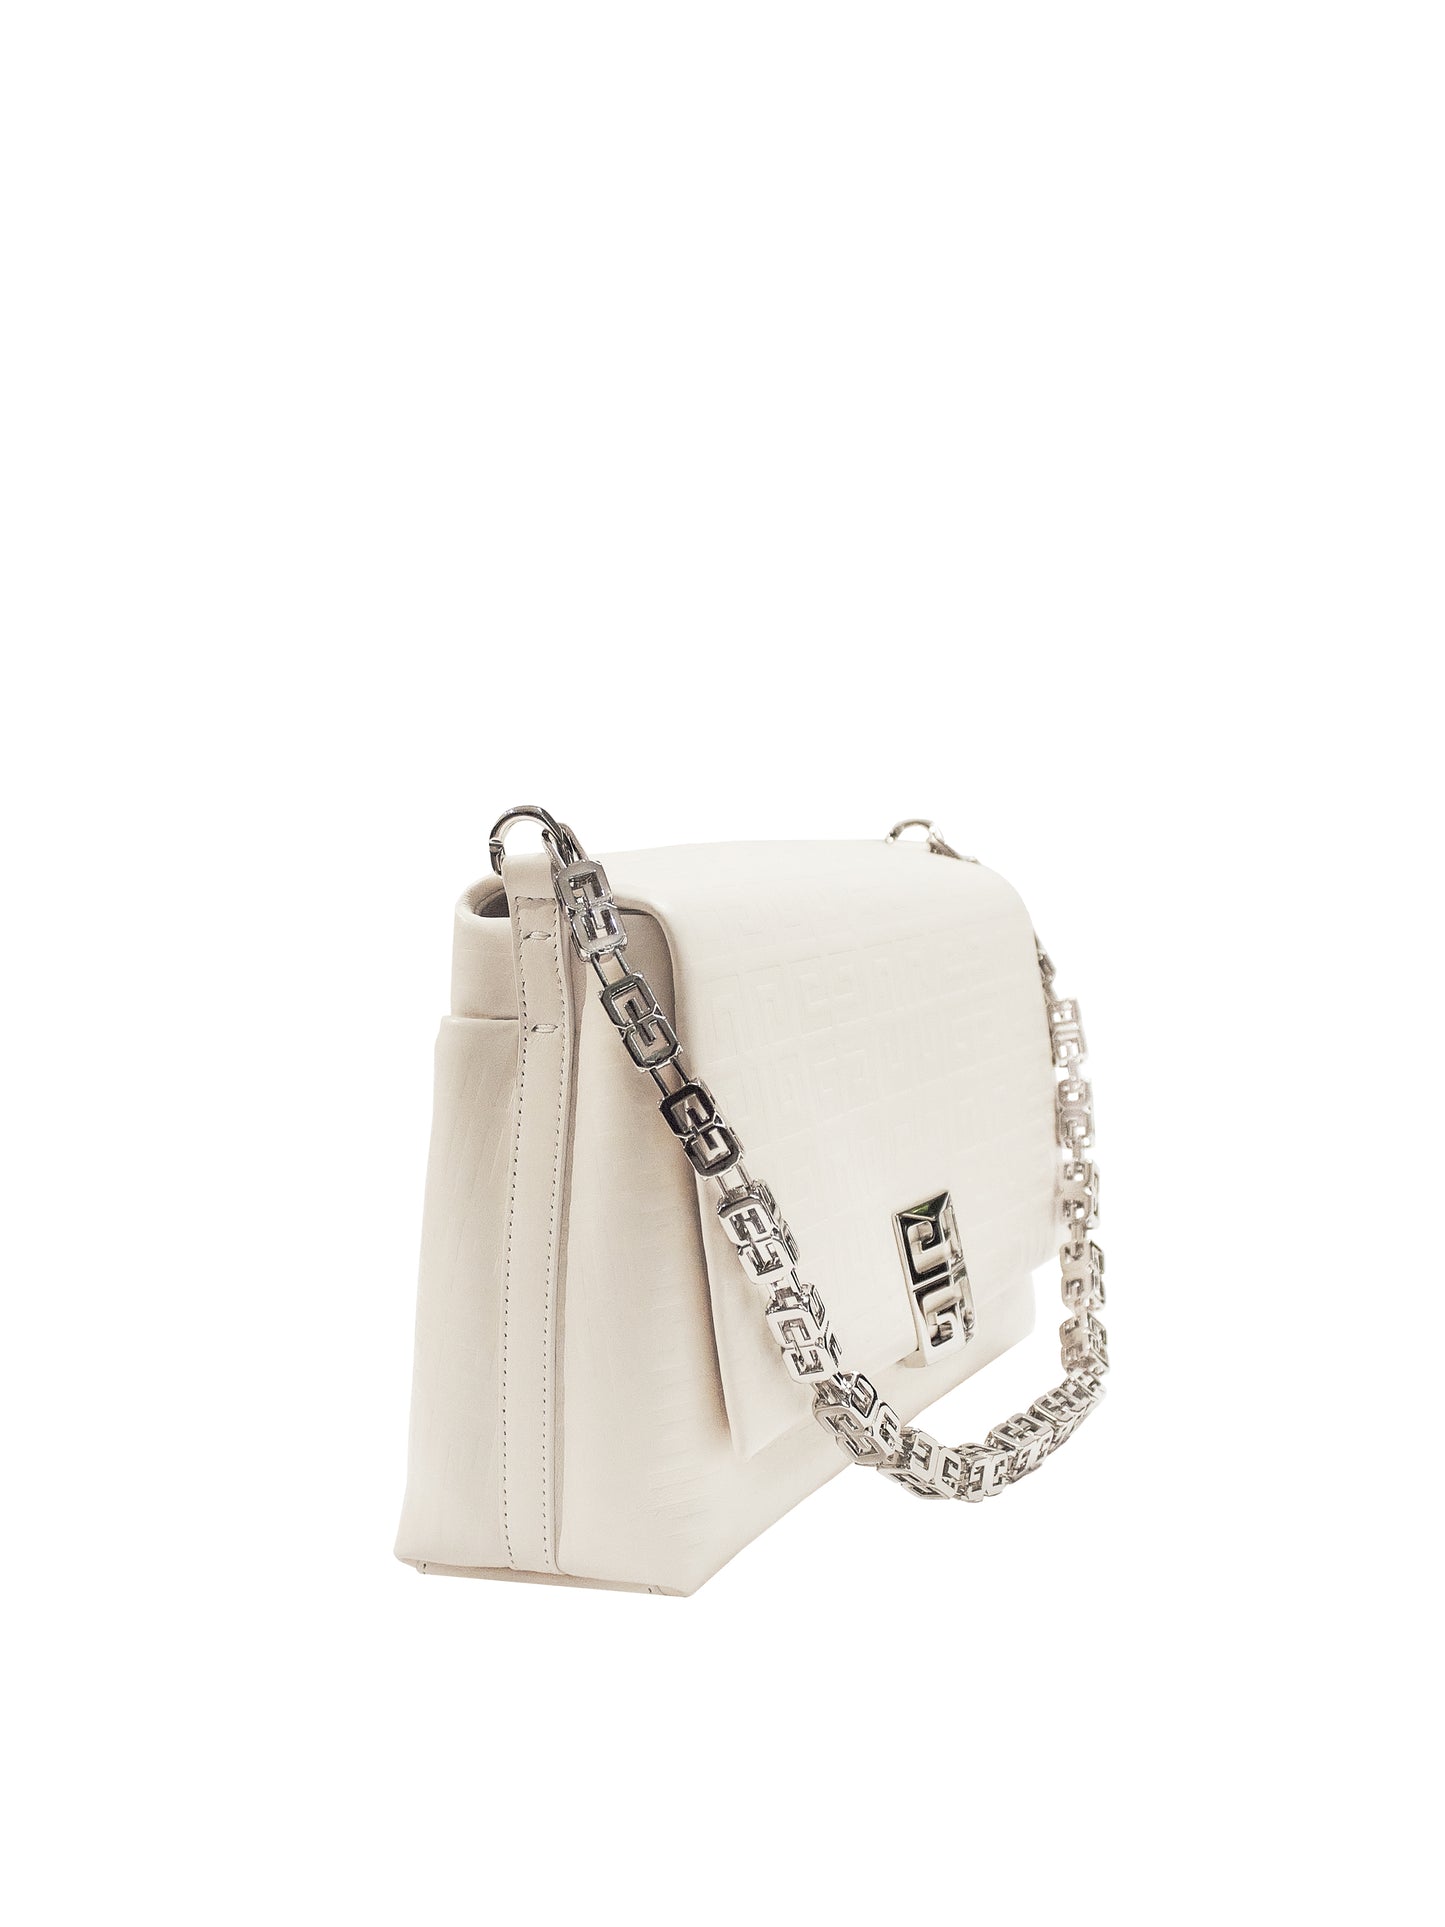 Givenchy Tasche 4G Soft Medium Weiss